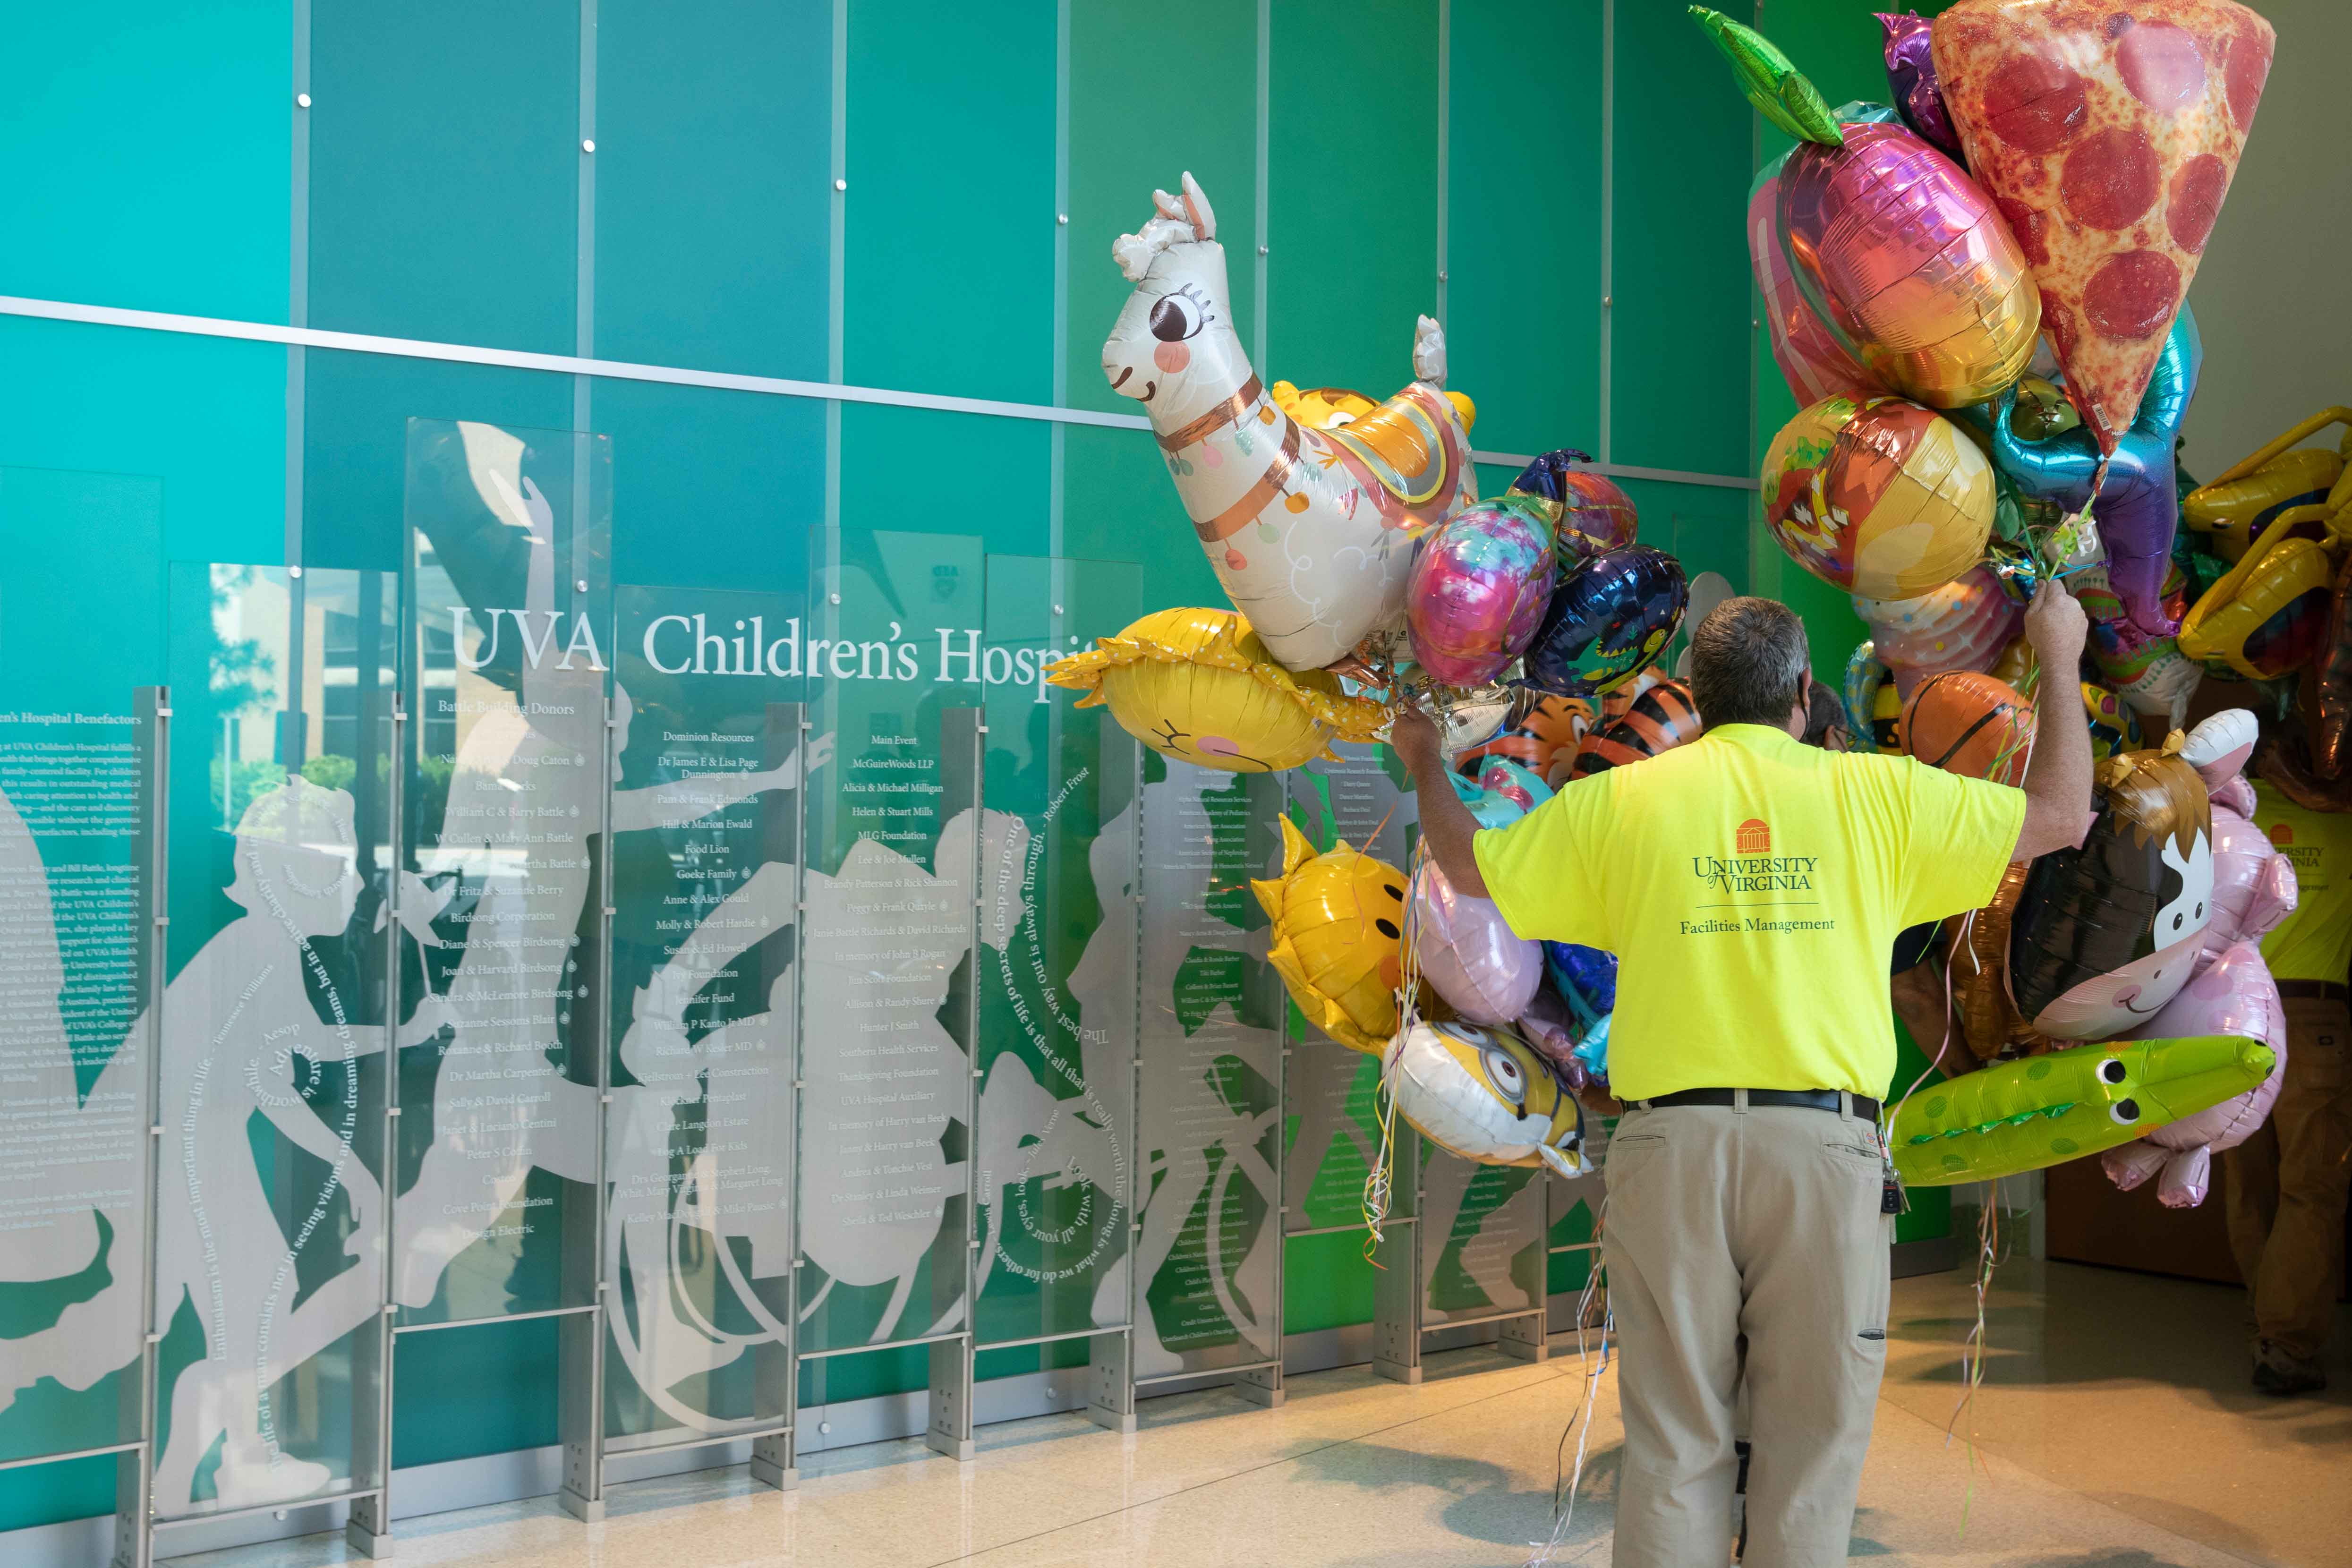 UVA Children's Hospital and Balloons